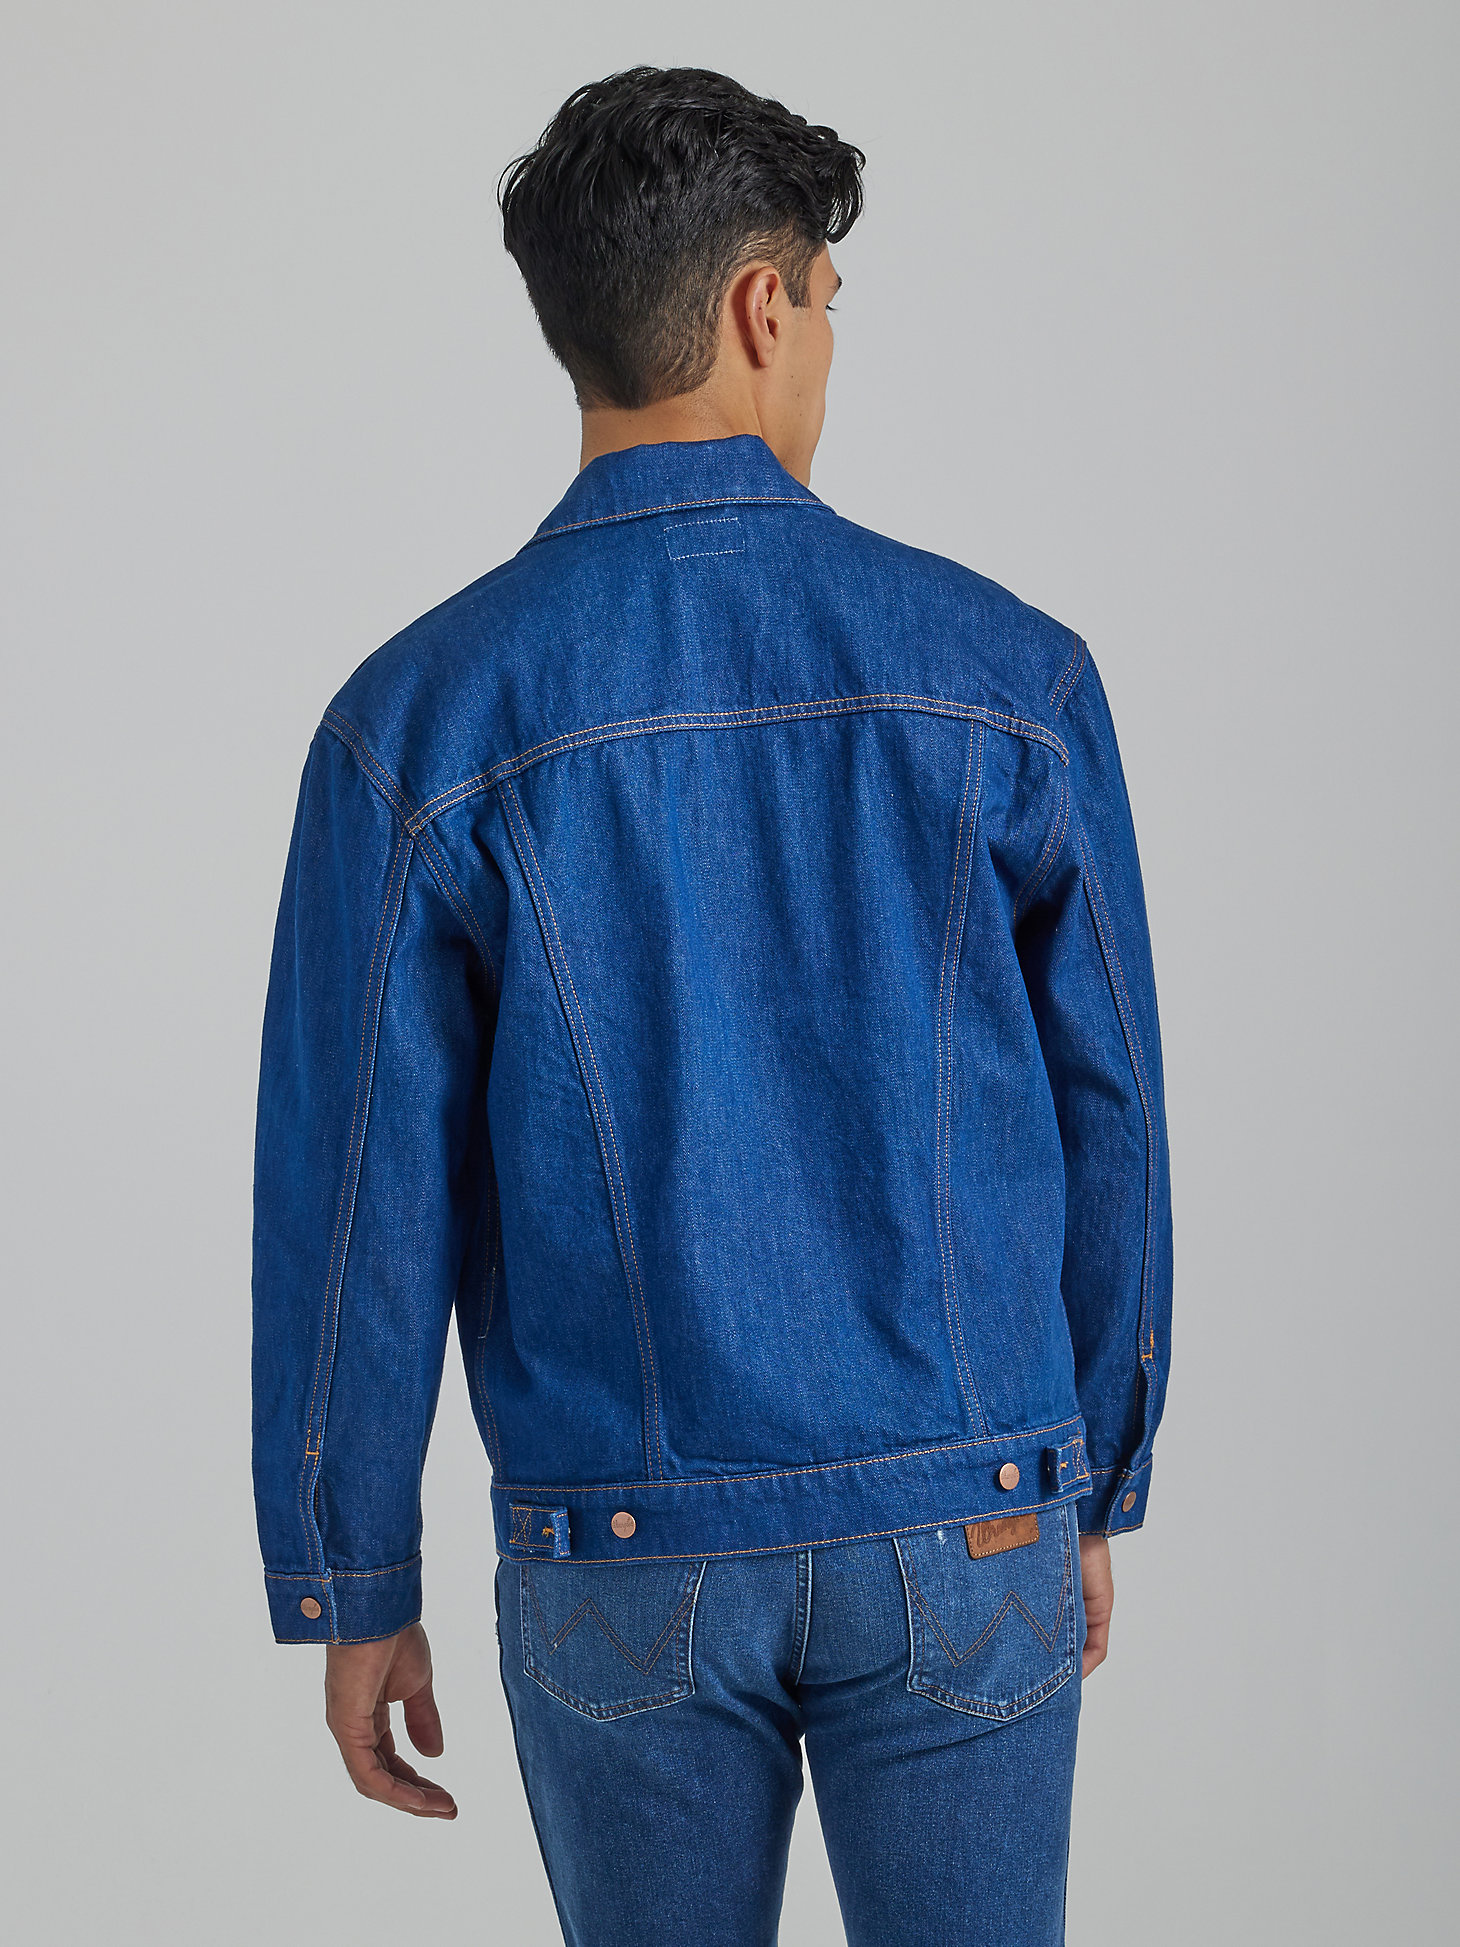 Men's Heritage Anti-Fit Jacket in Wrangler Blue alternative view 1